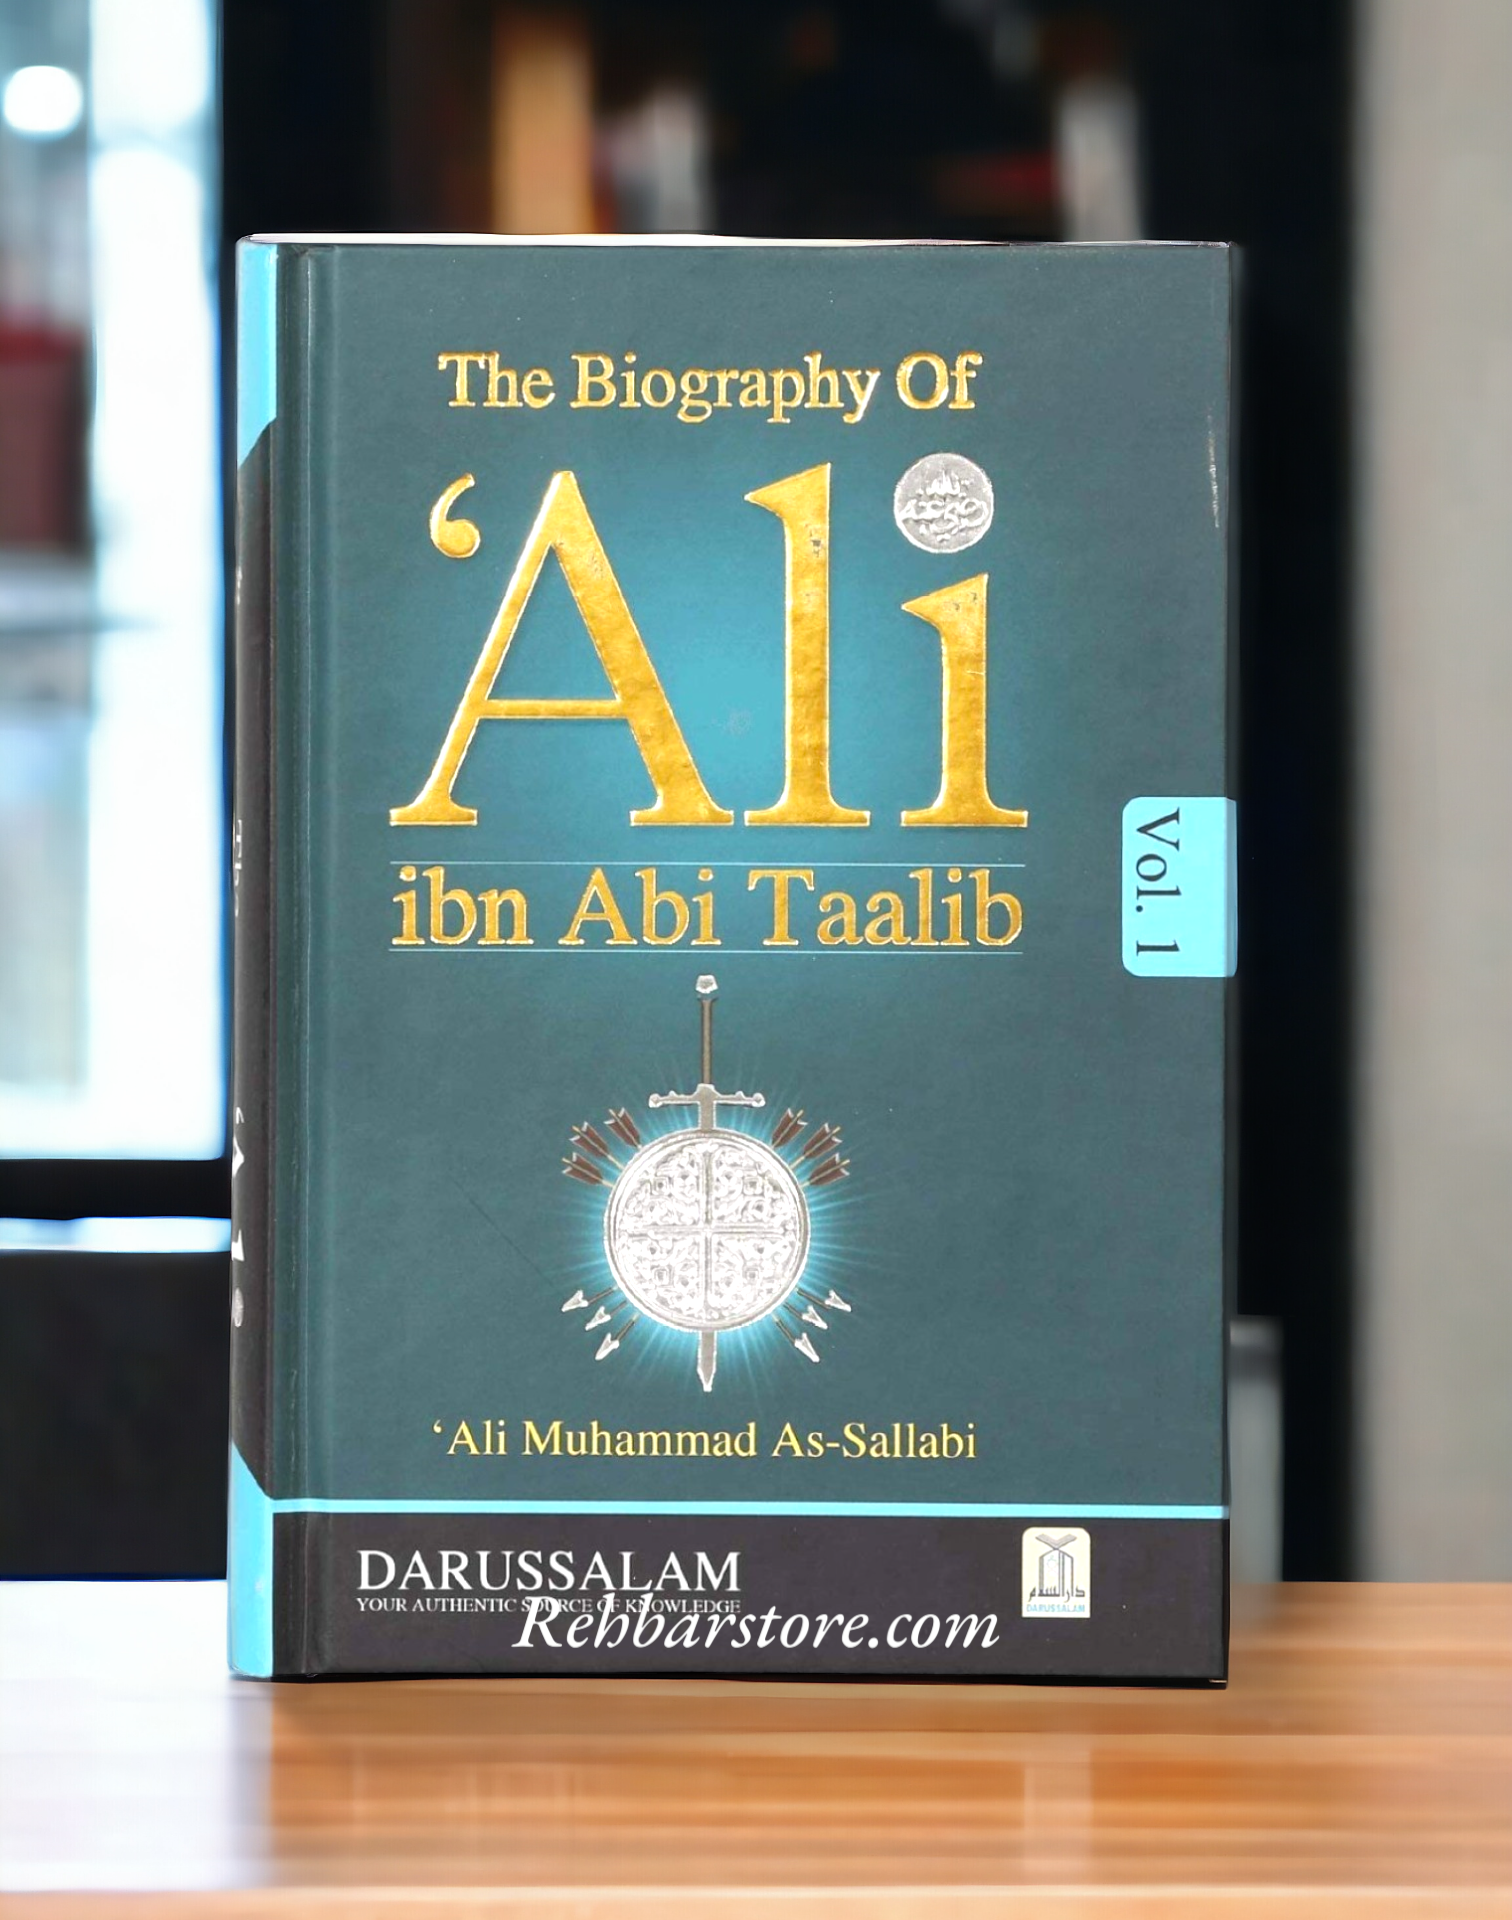 The Biography of Ali ibn Abi Talib